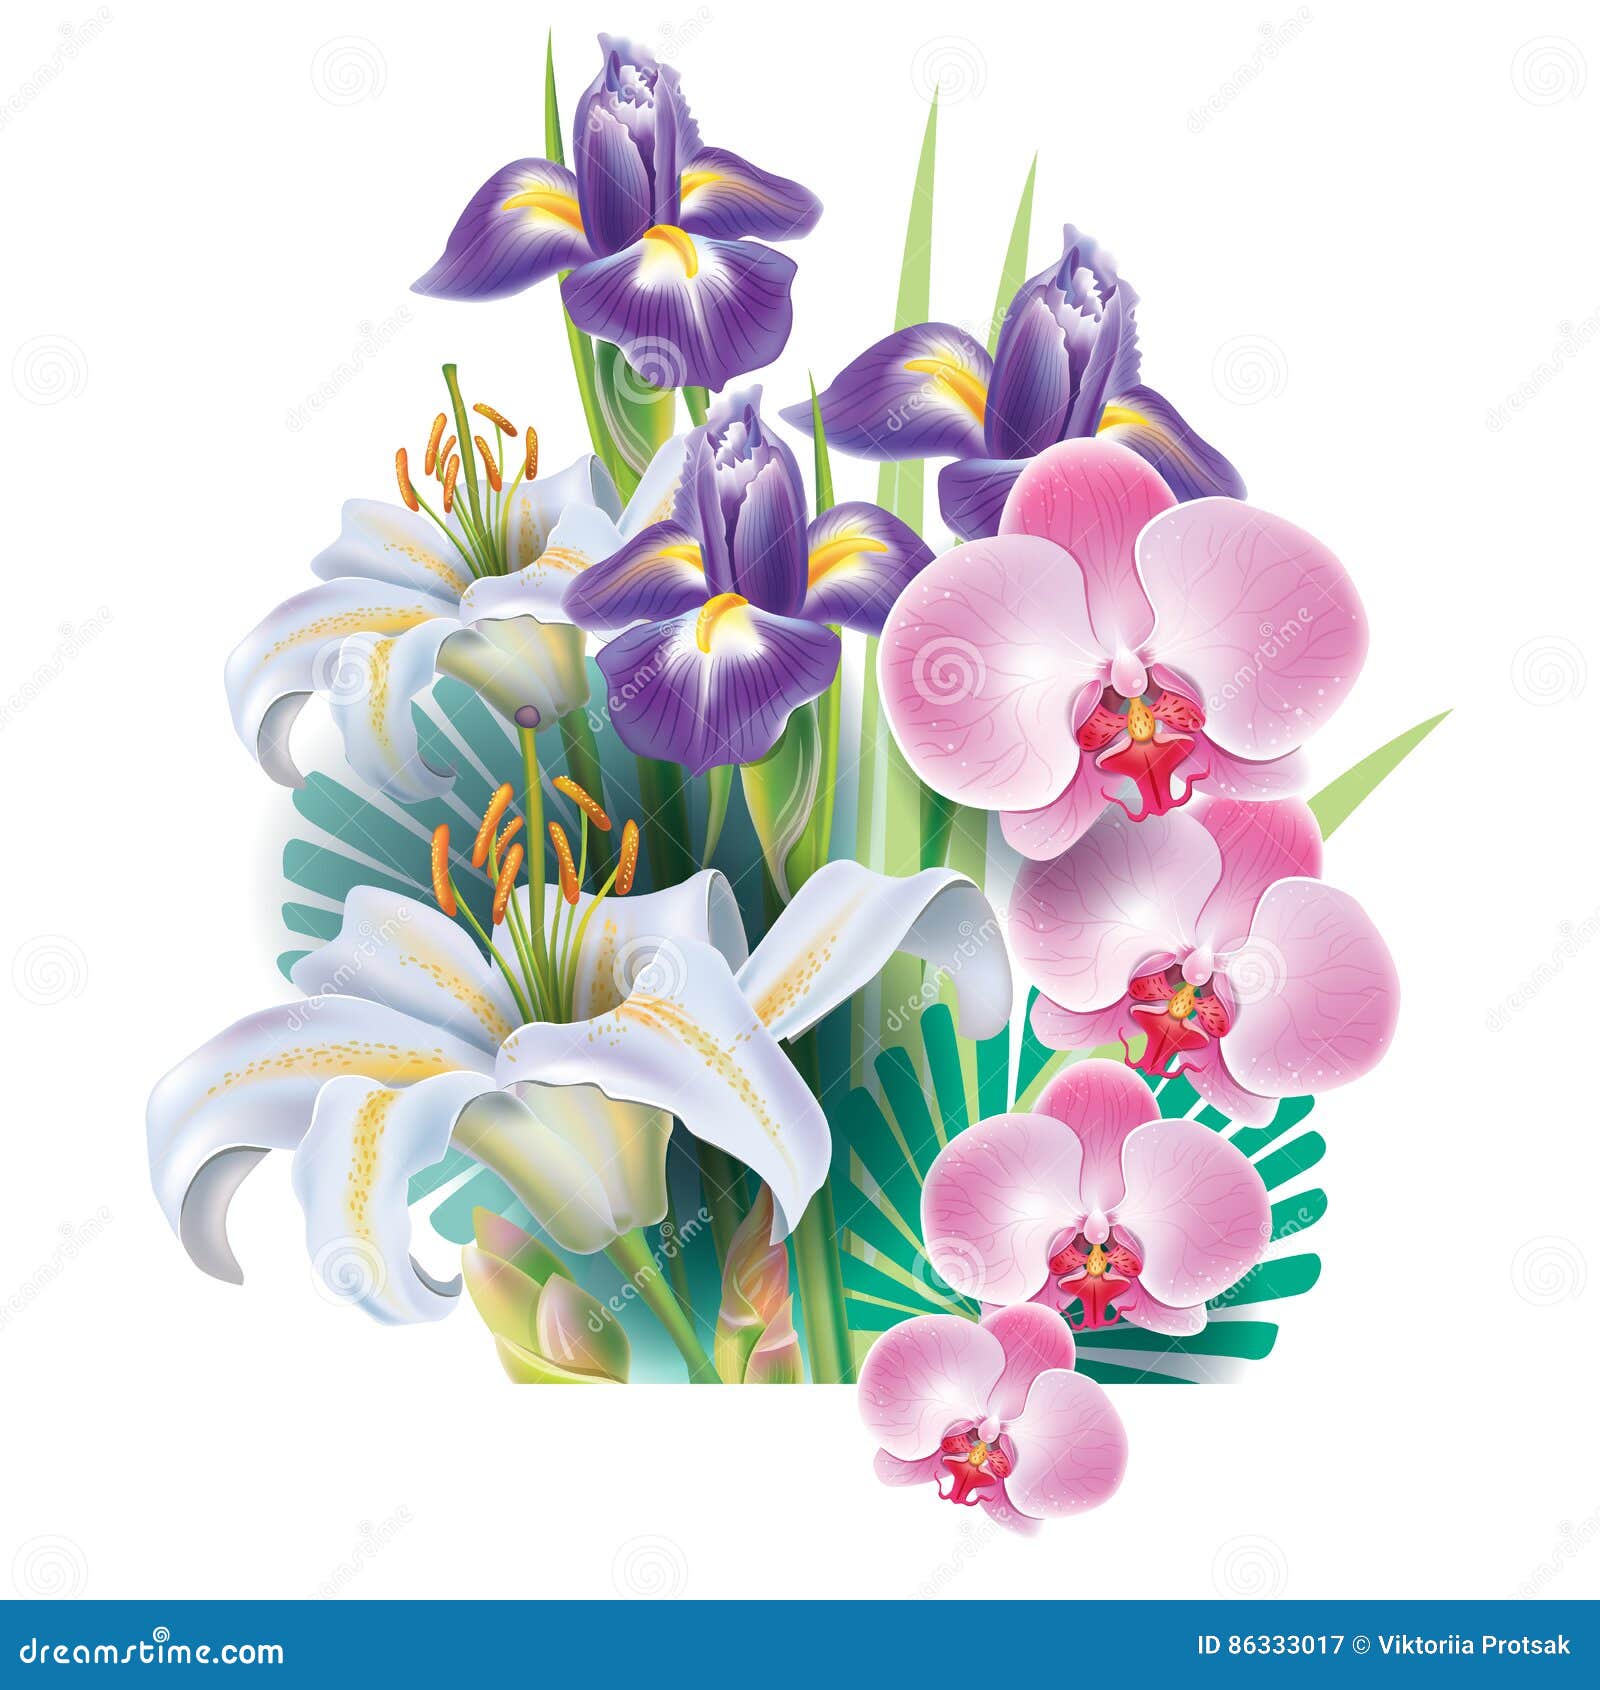 Arrangement from flowers stock vector. Illustration of blossom - 86333017